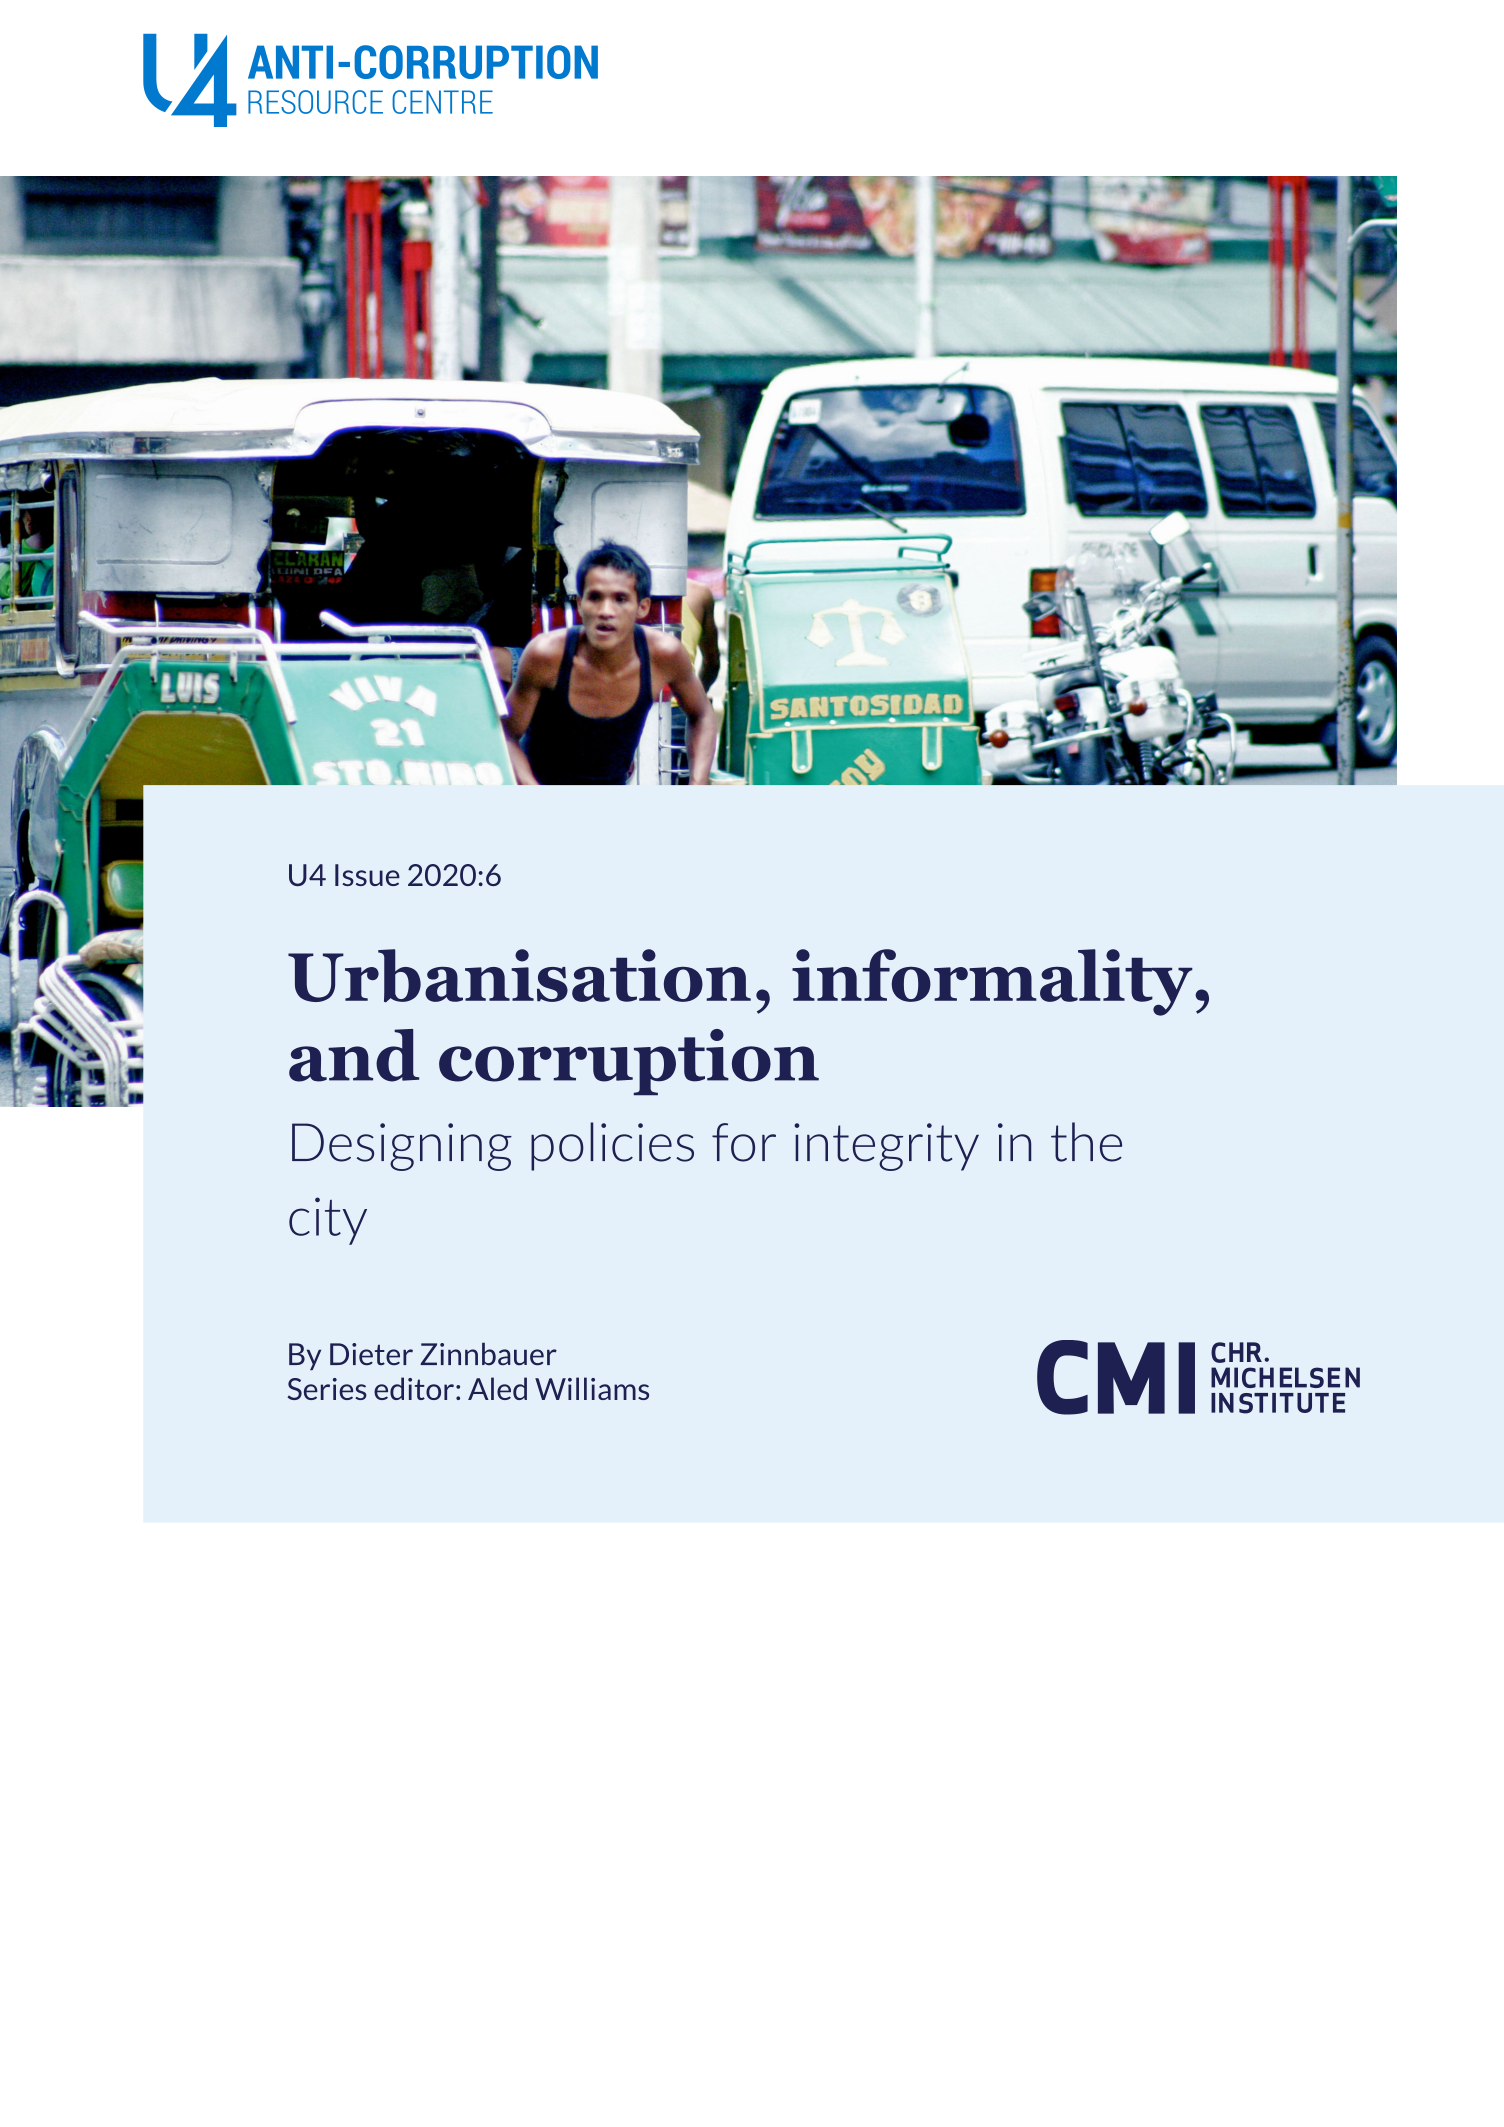 Urbanisation, informality, and corruption